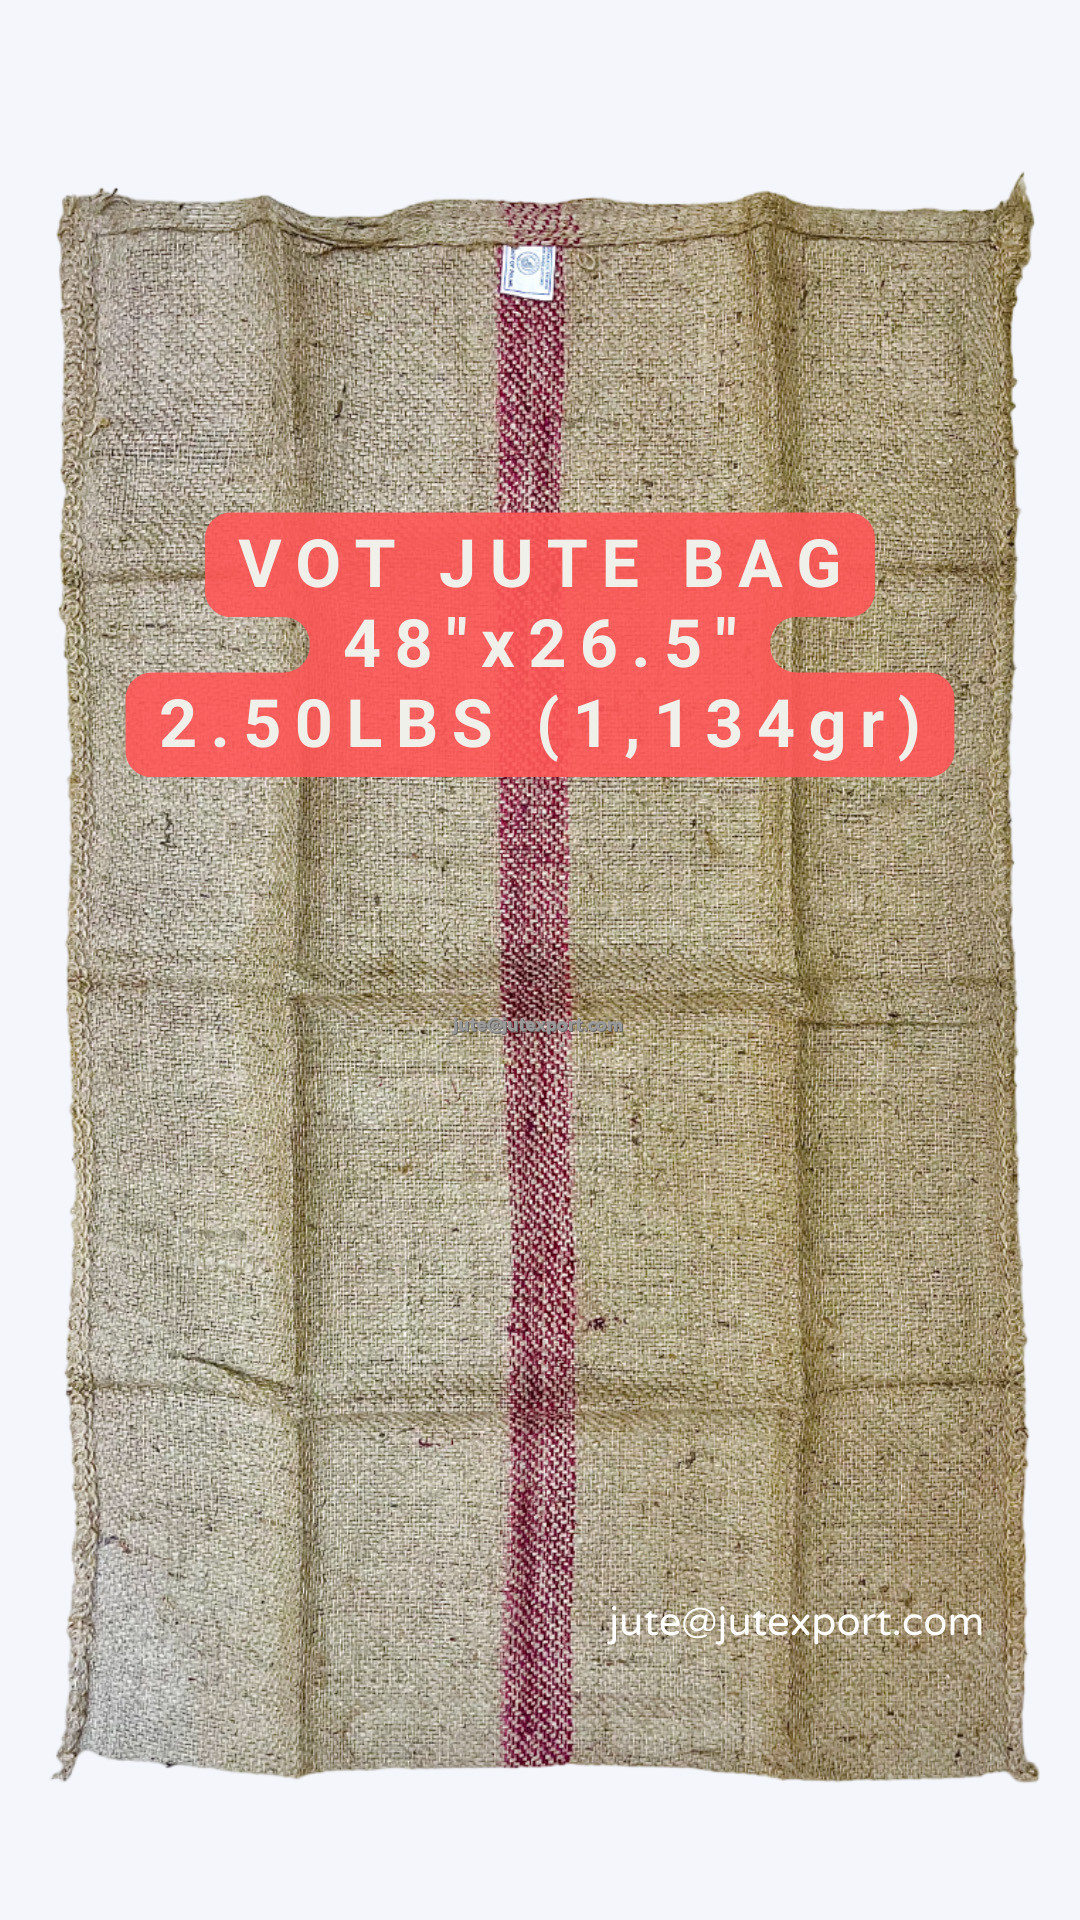 New Jute Bags (100Kgs)